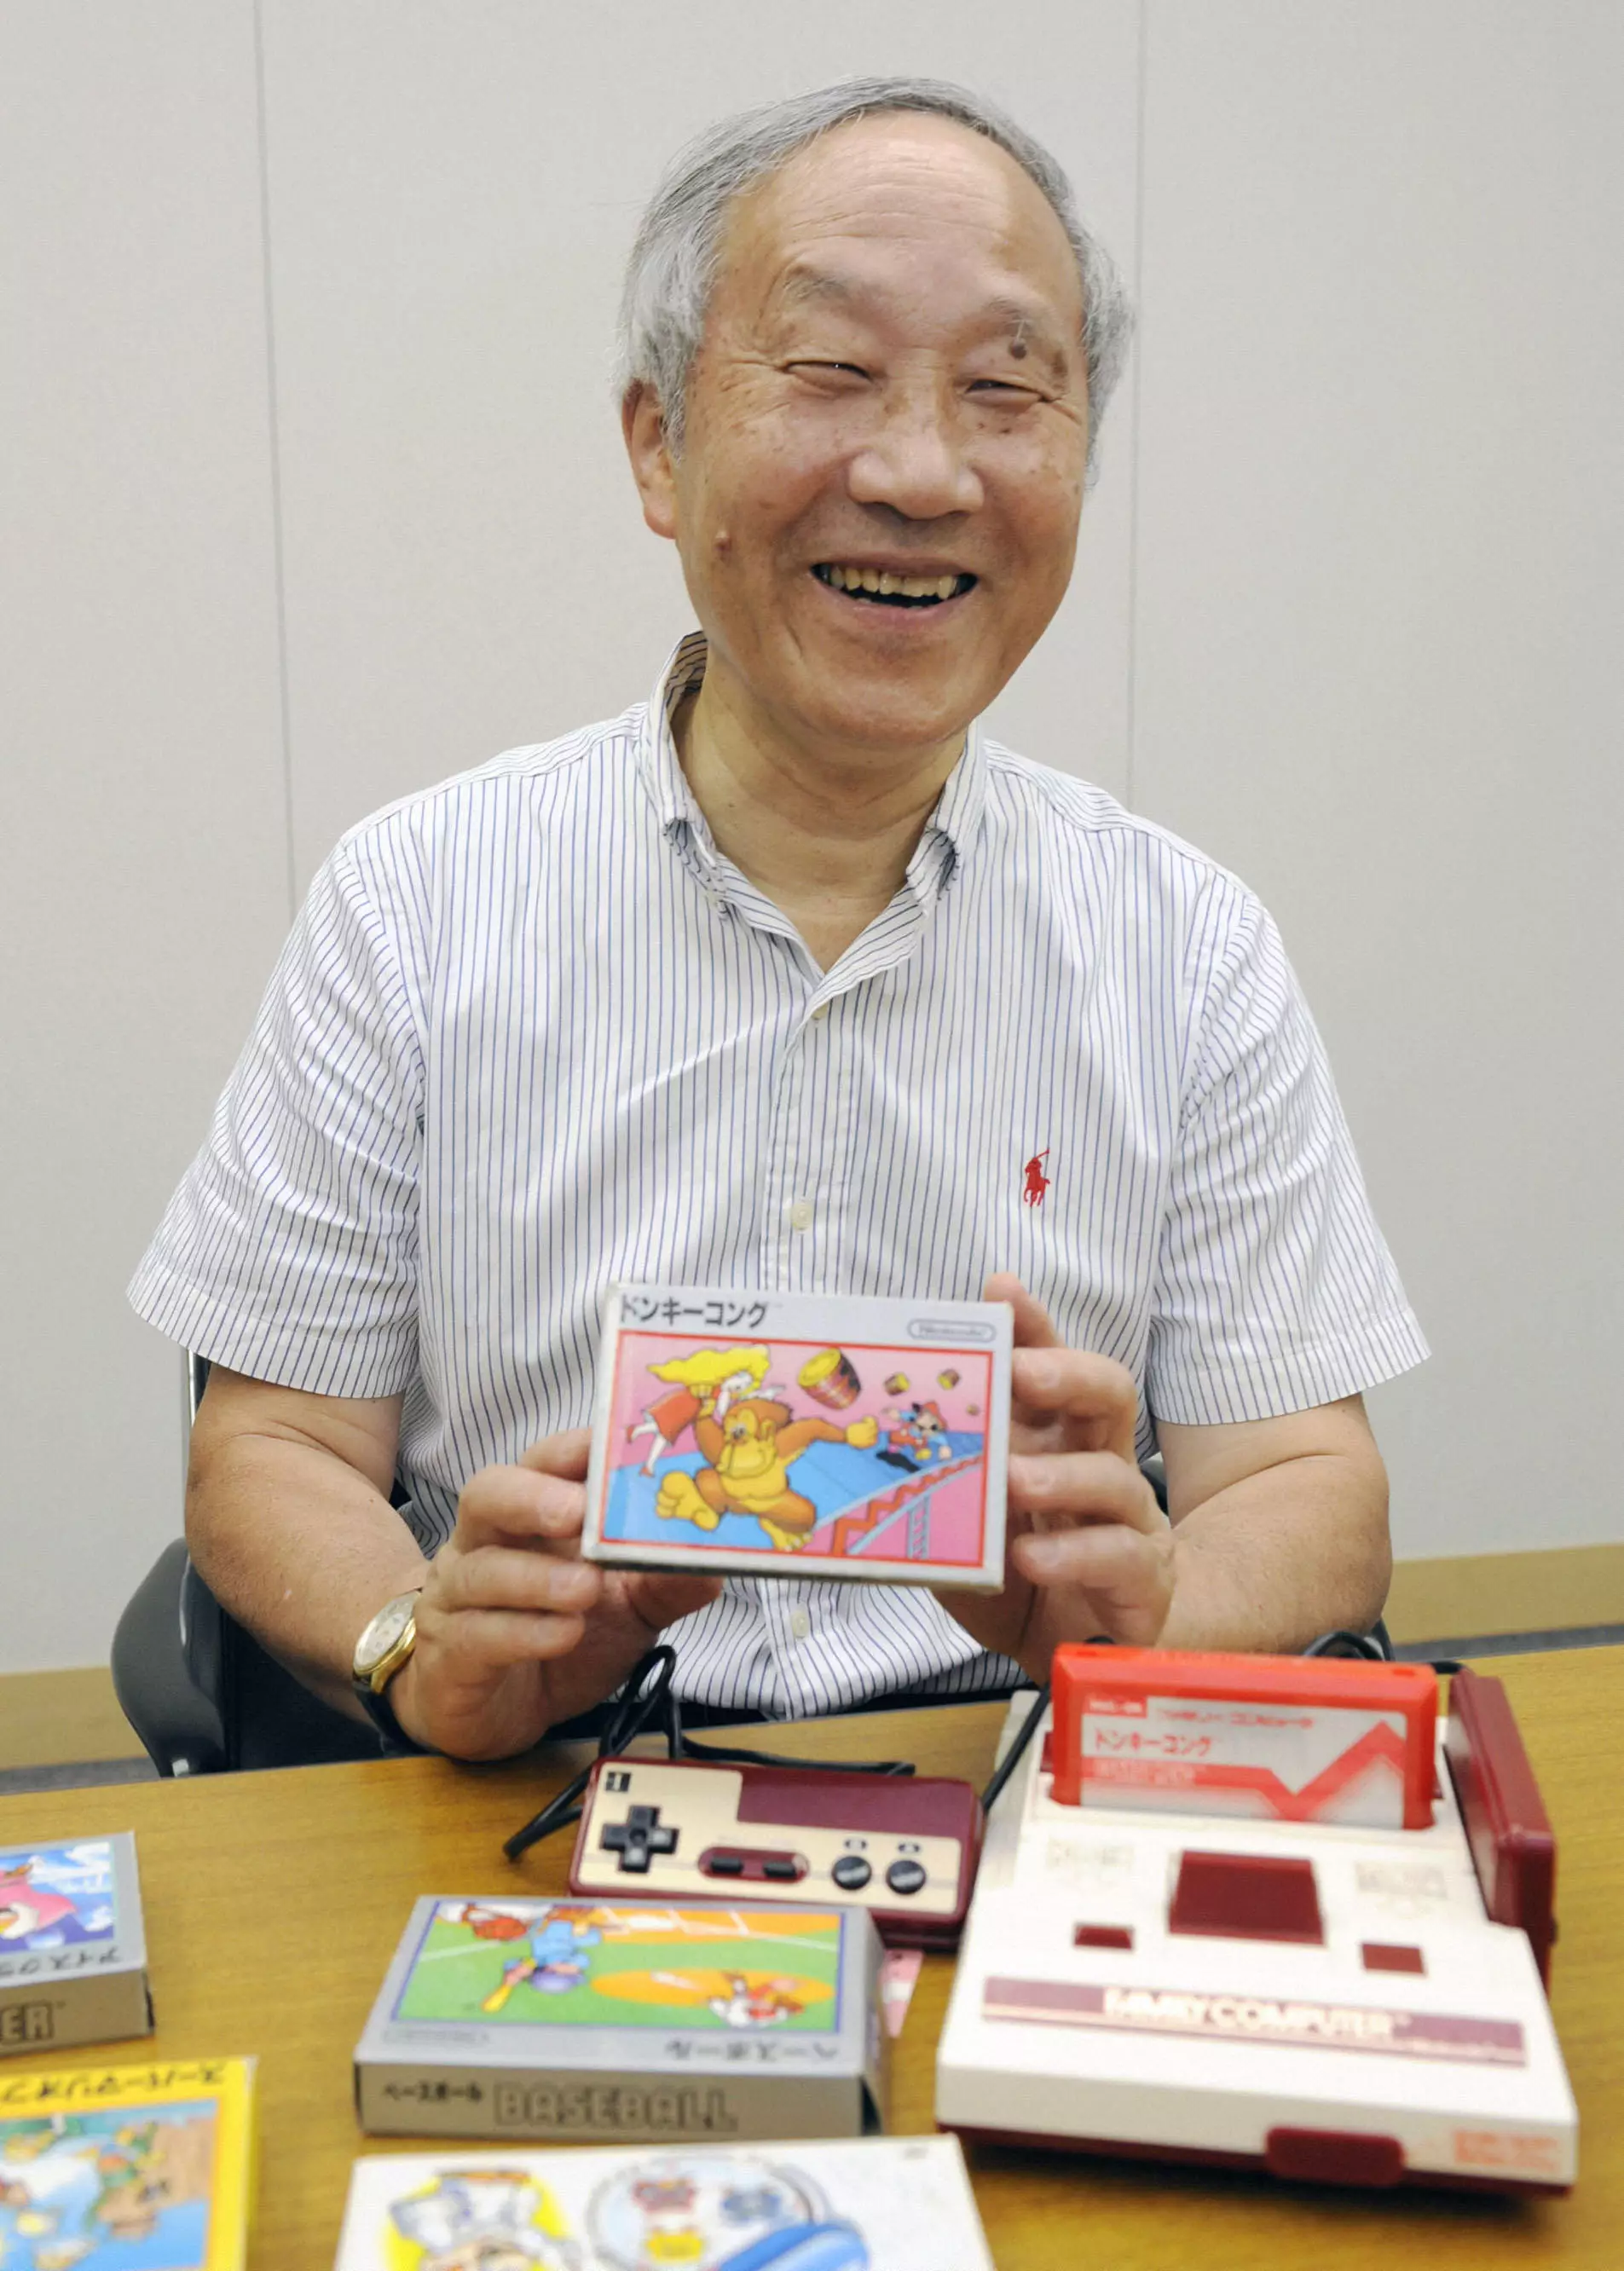 Creator Of The NES and SNES, Masayuki Uemura, Has Died At 78